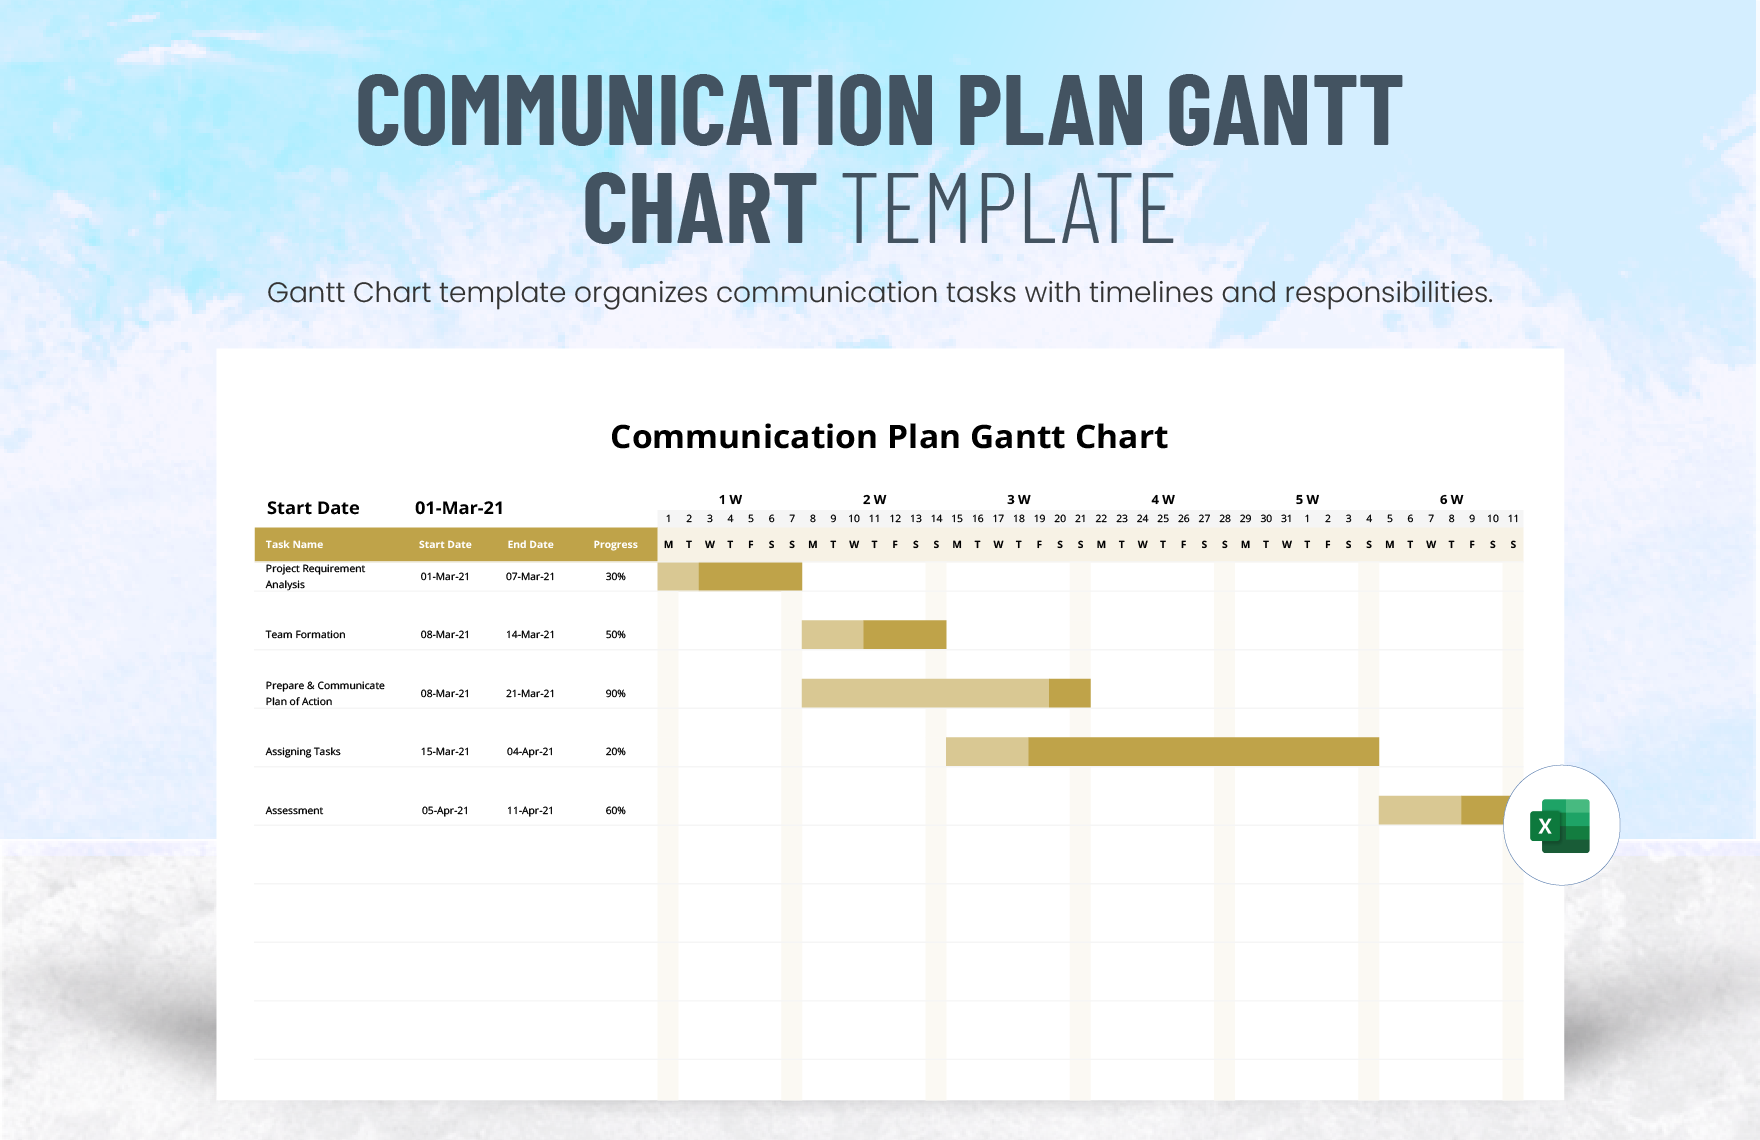 Communication Plan Gantt Chart Template in Excel